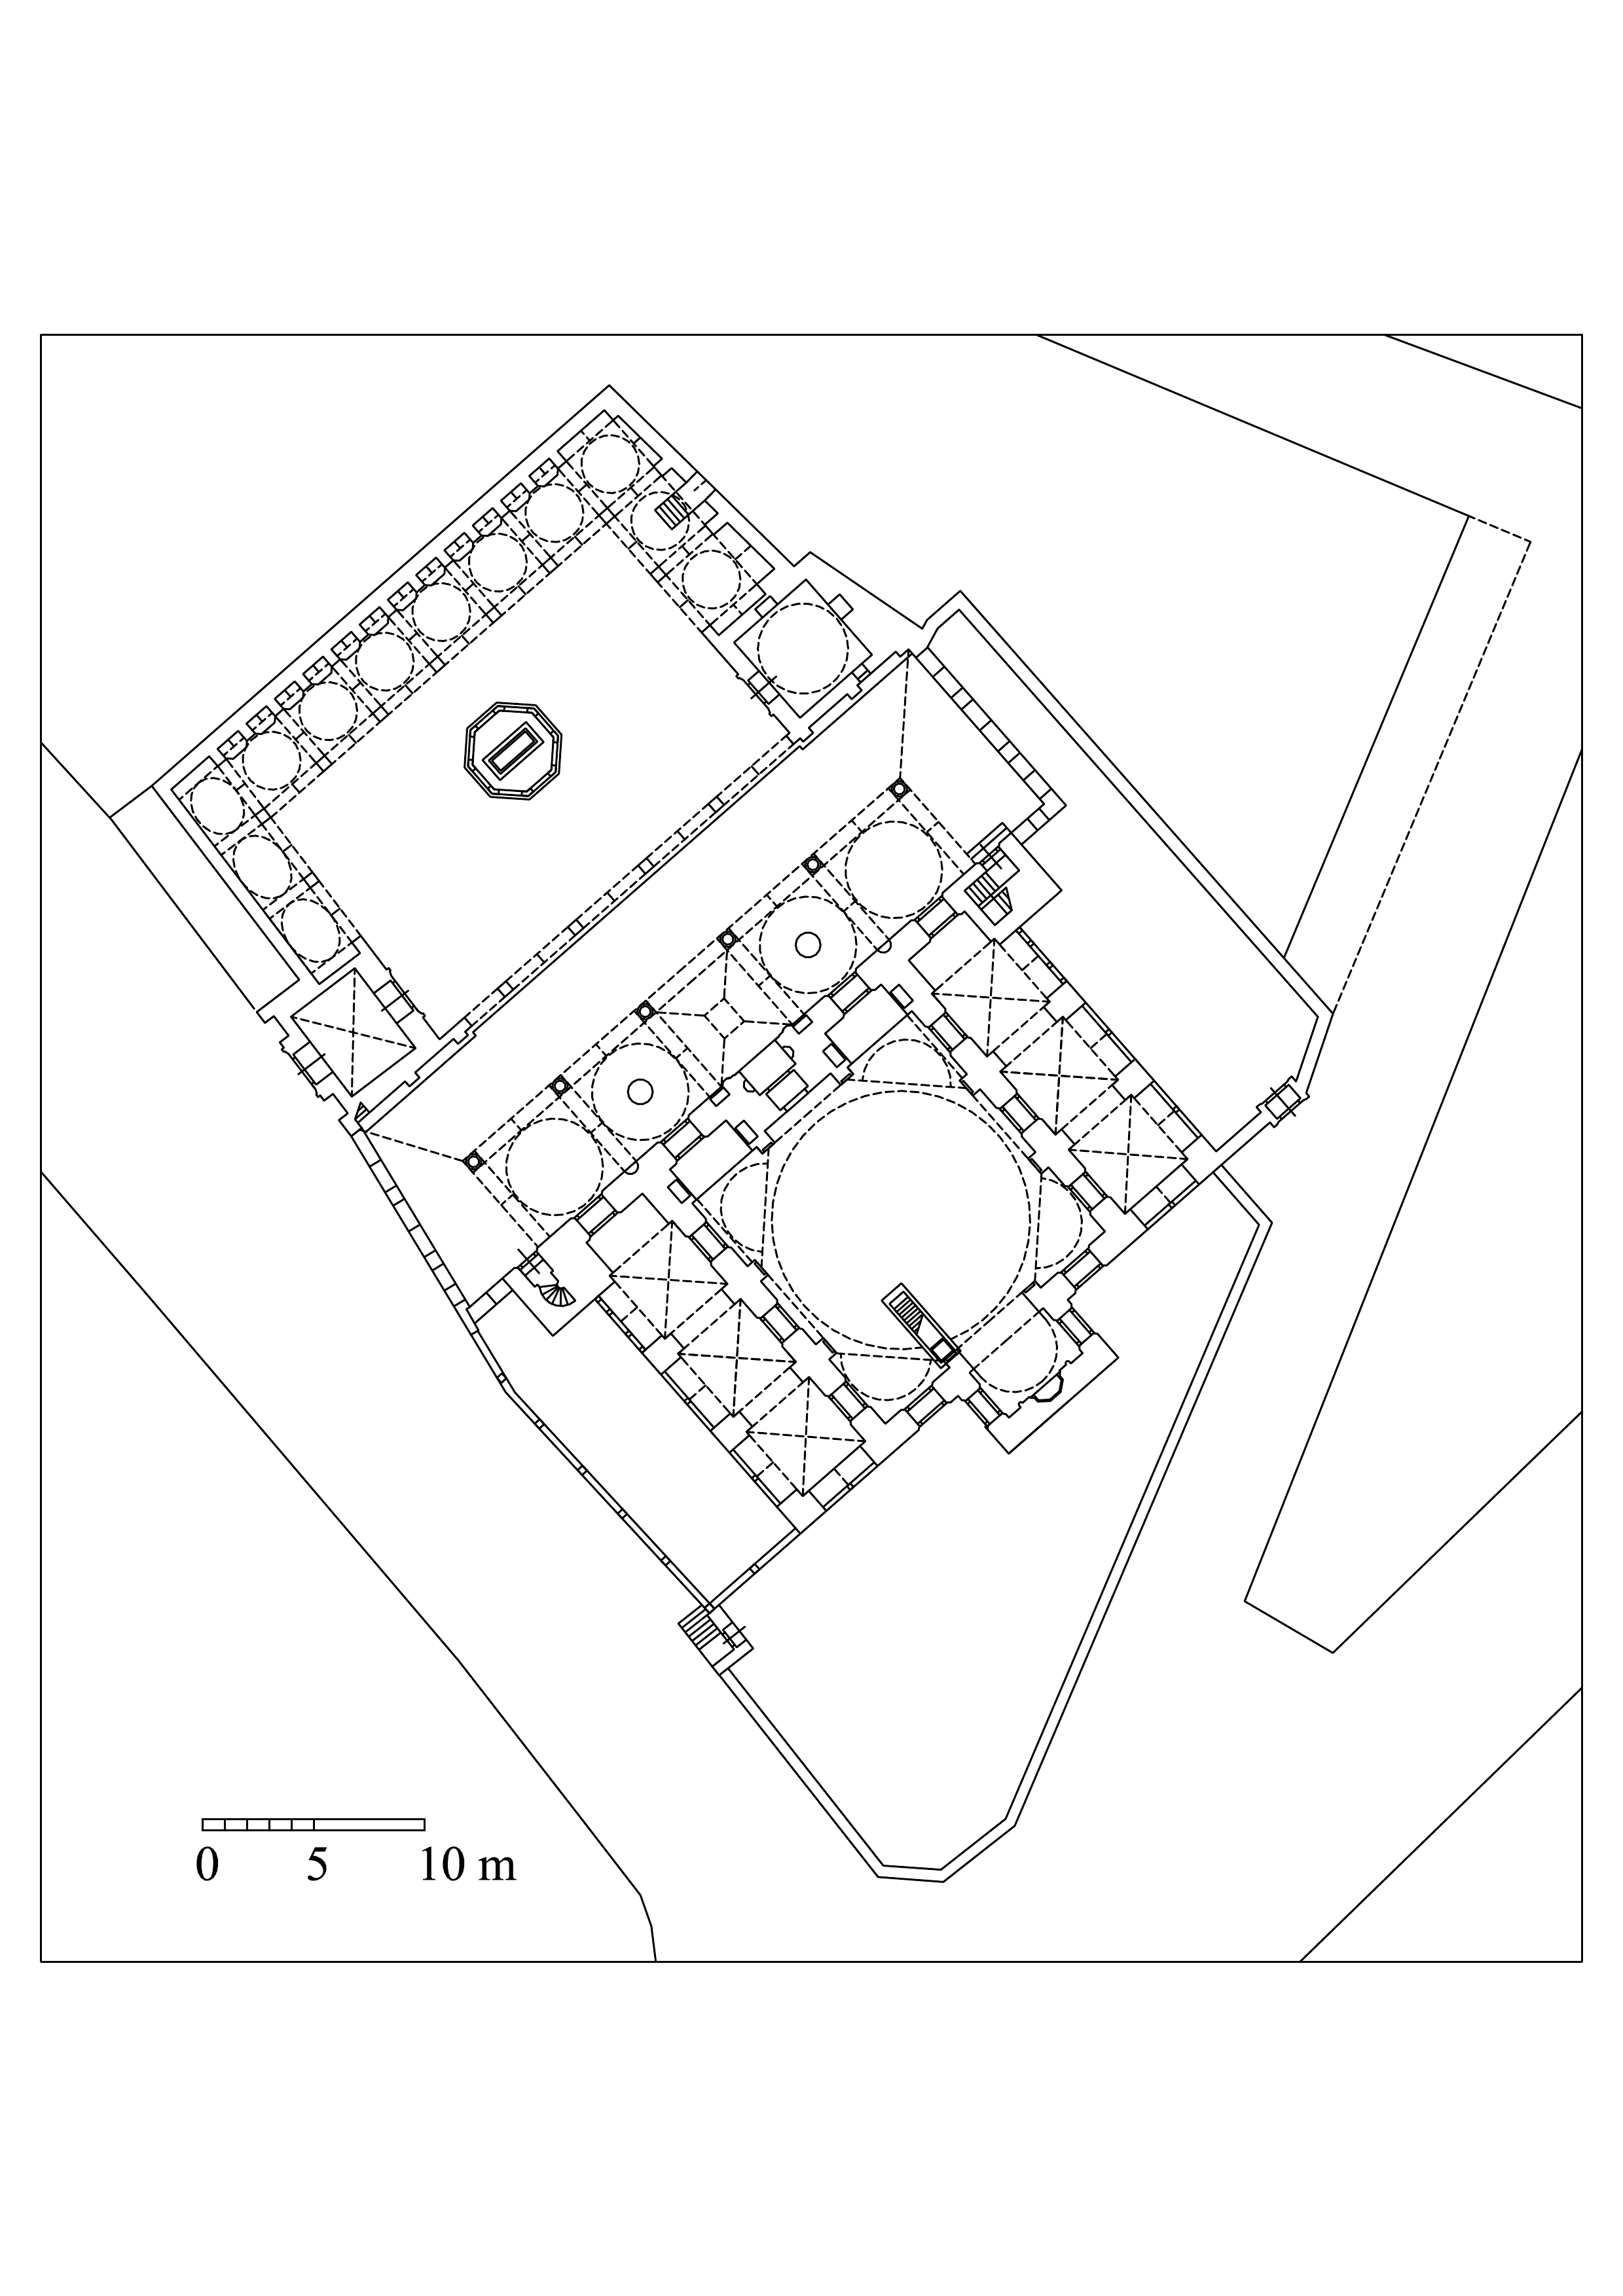 Floor plan of mosque, ground level